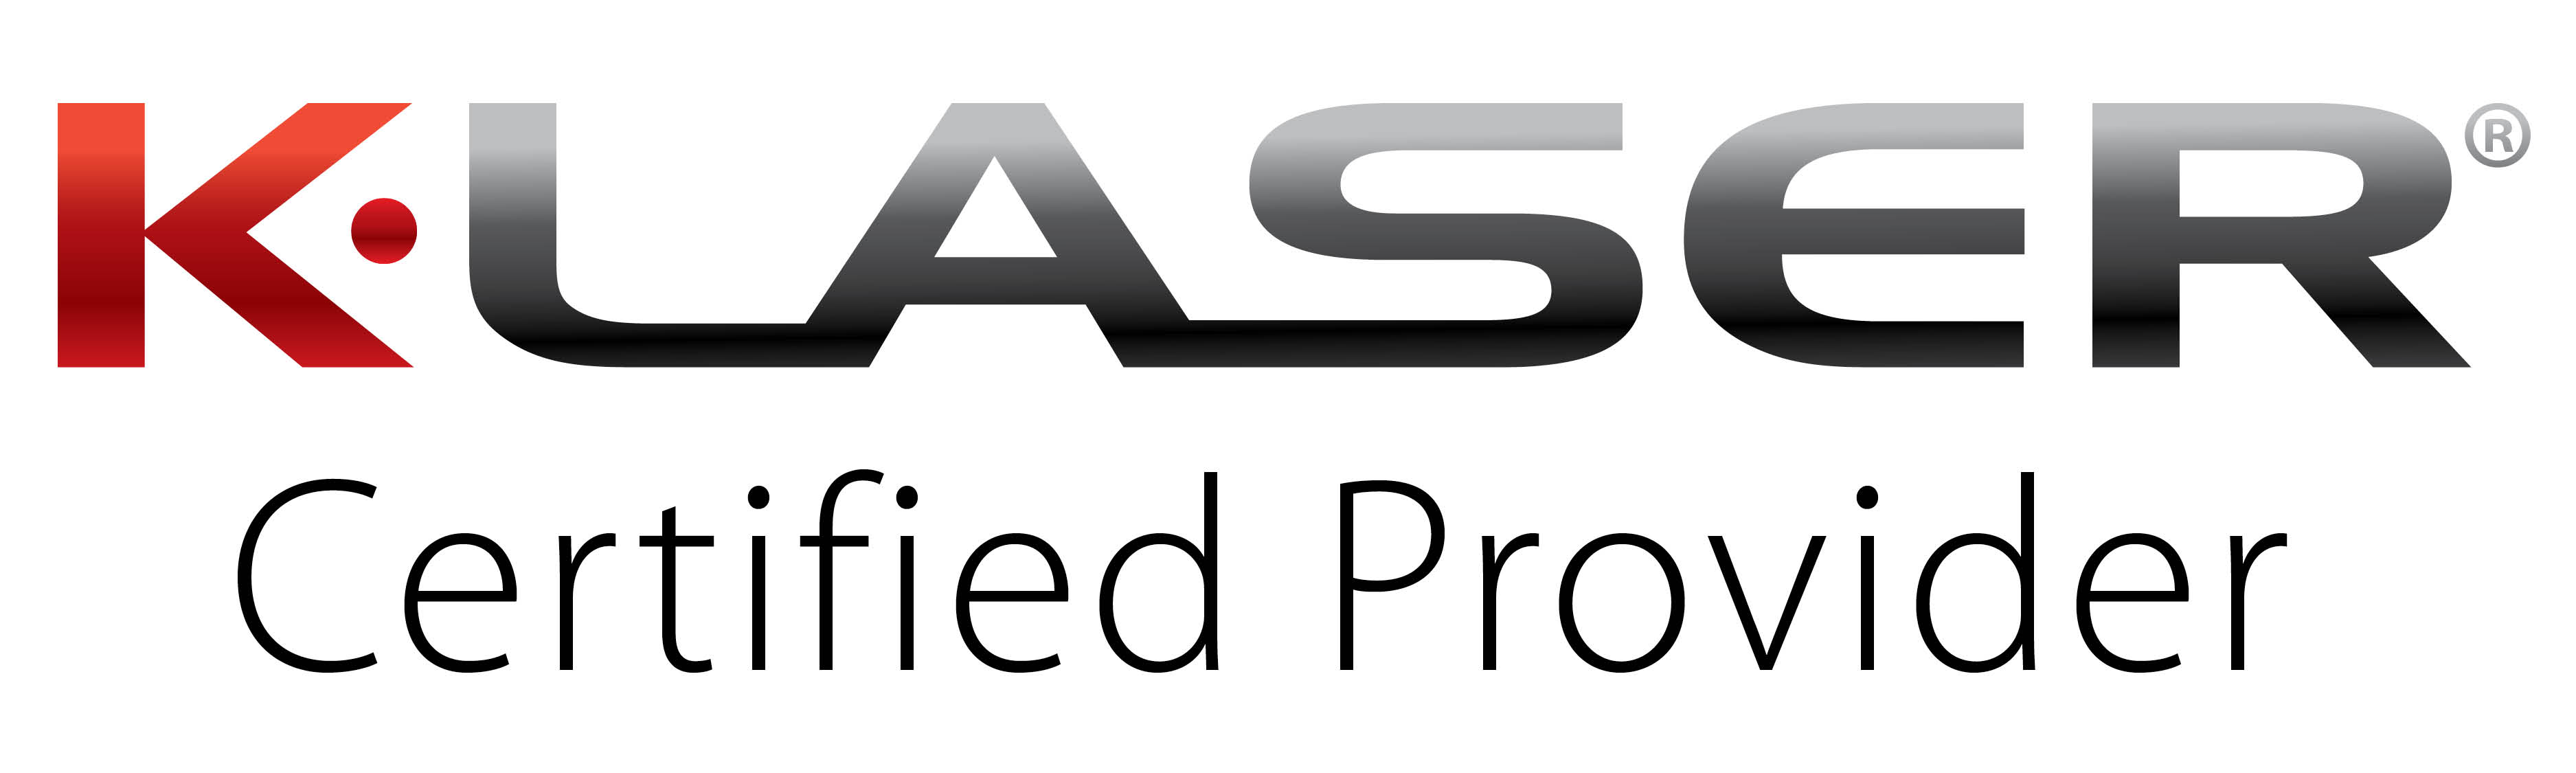 K-Laser Certified Provider logo